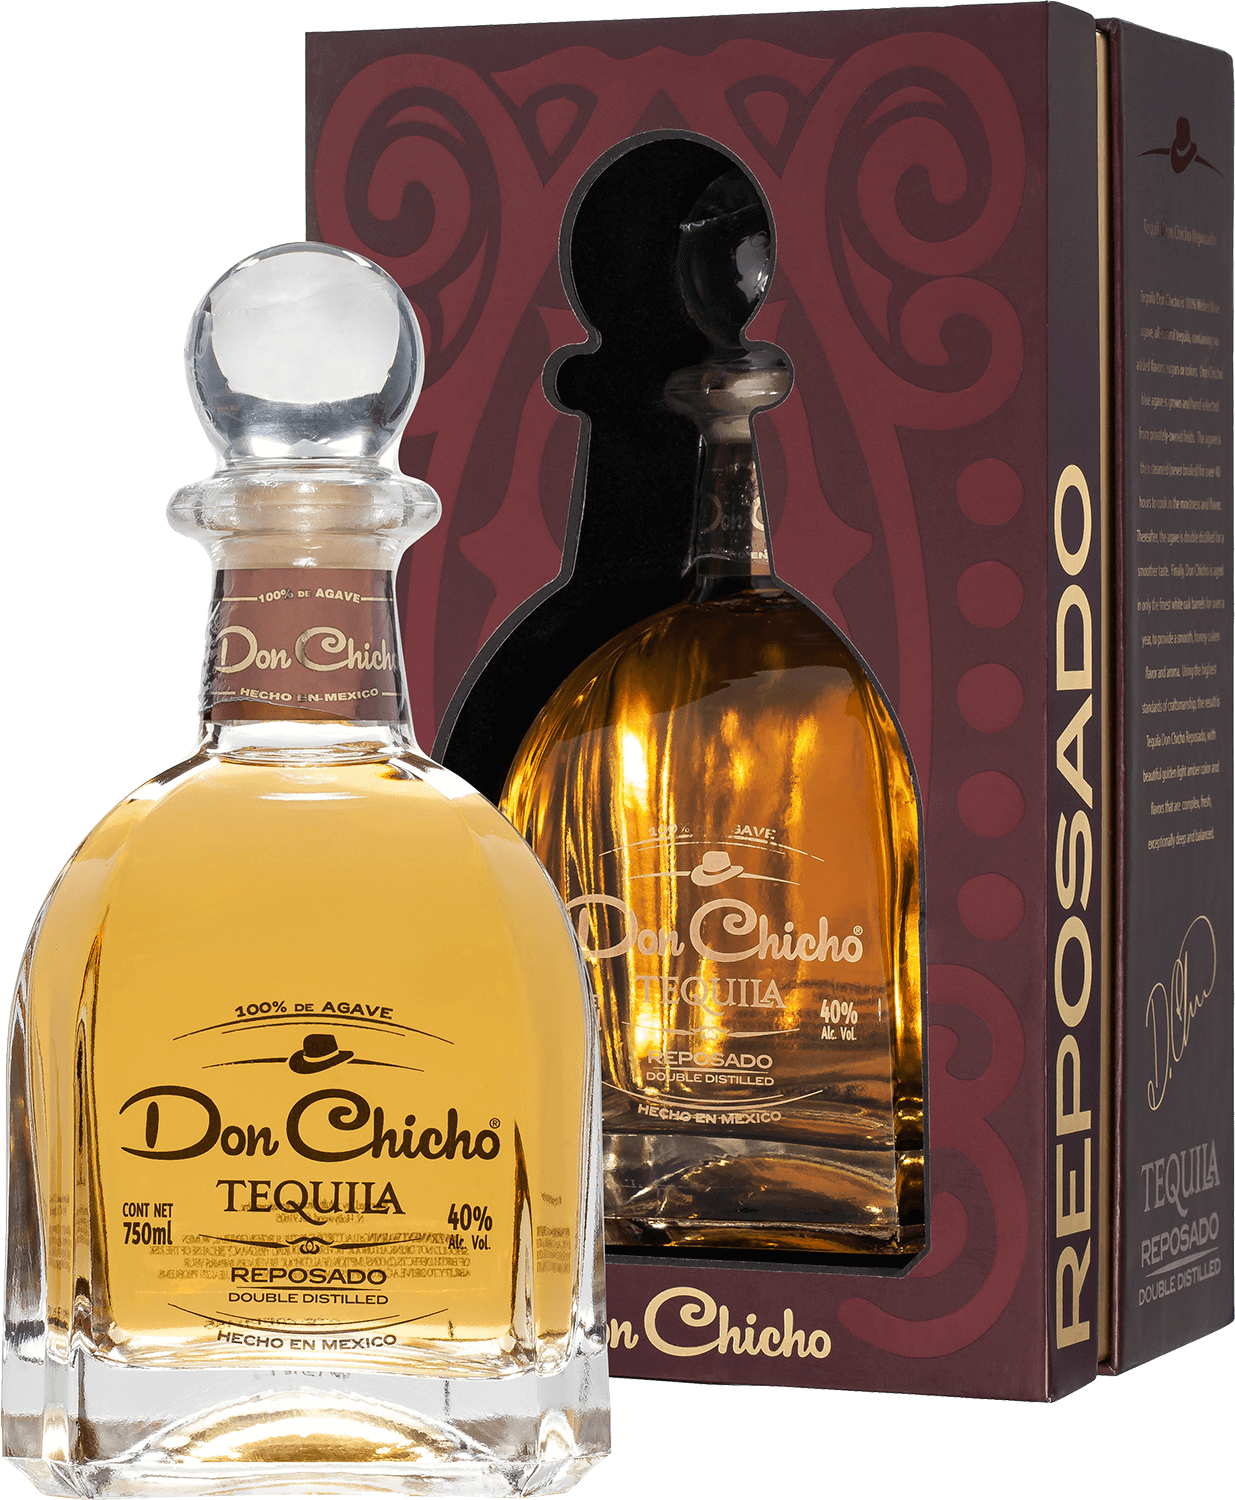 Don Chicho Reposado Tequila (gift box)